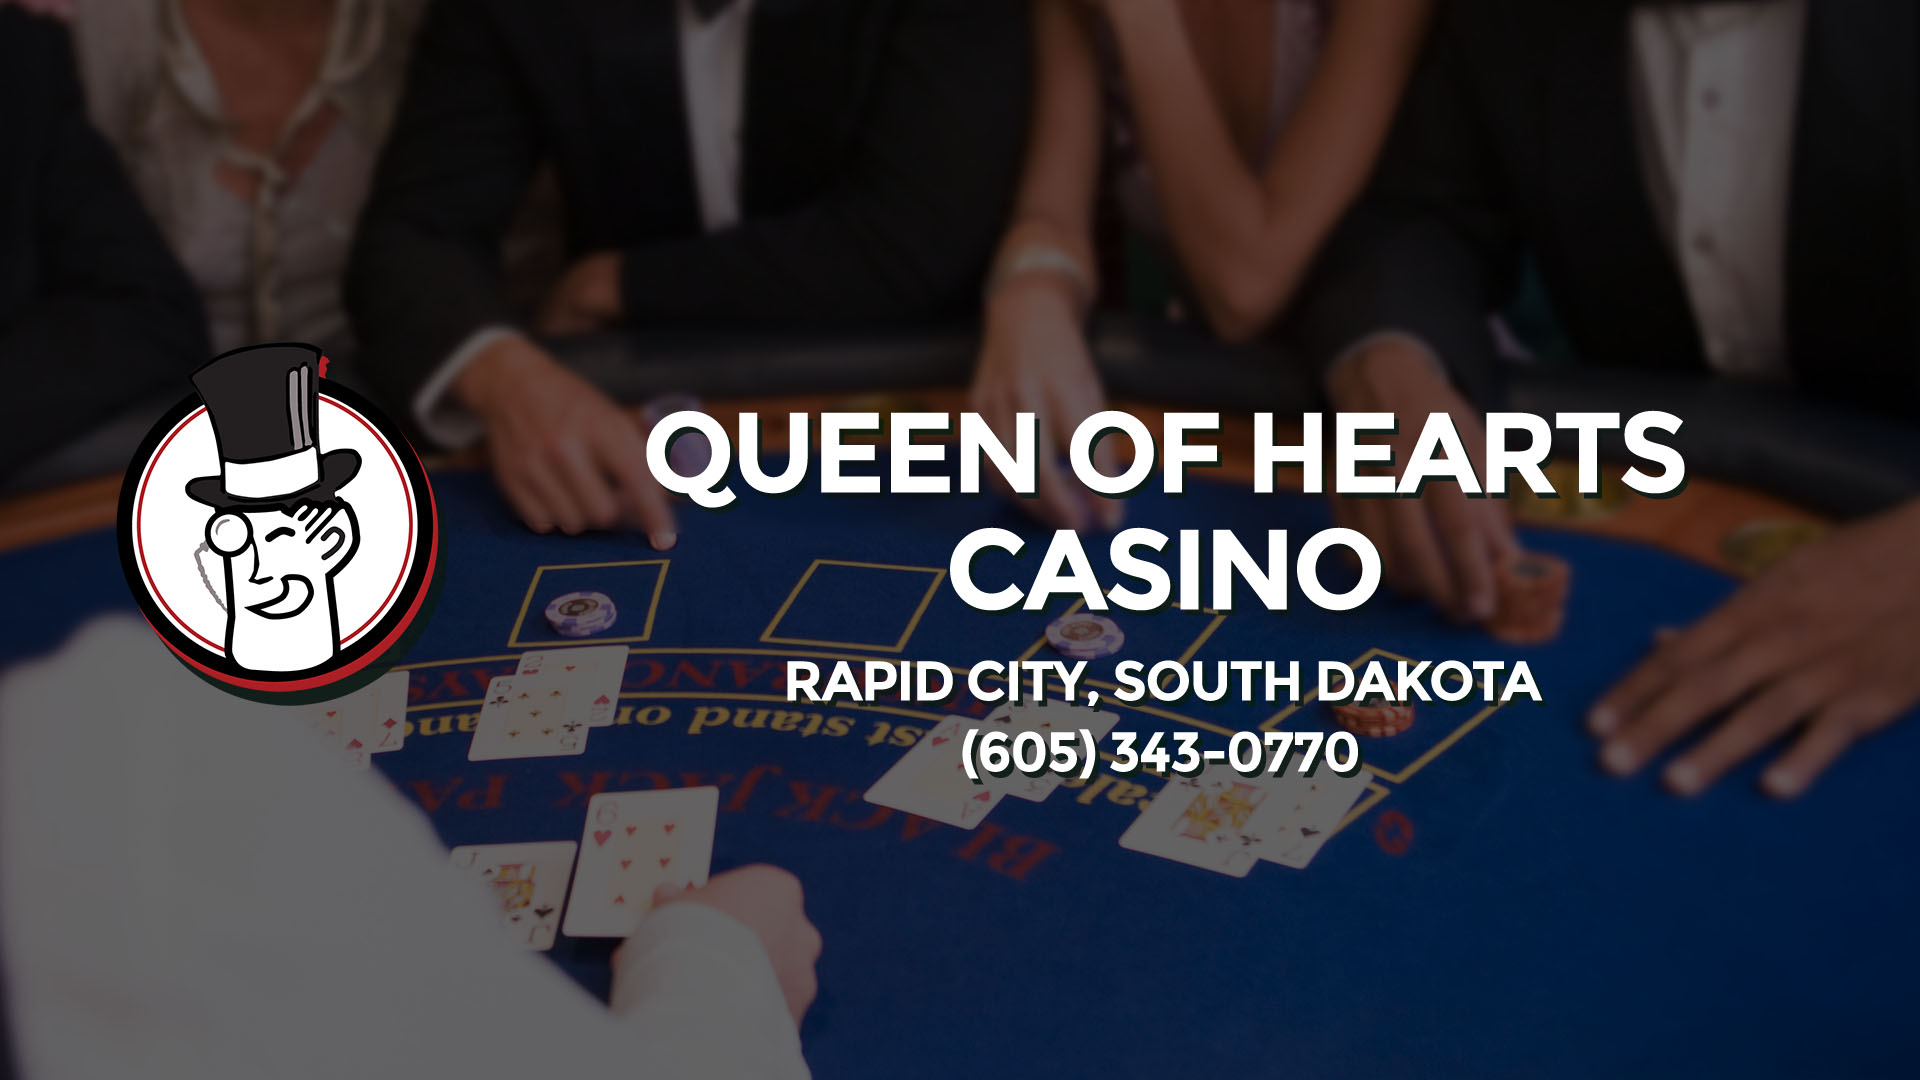 casino Queen of hearts images